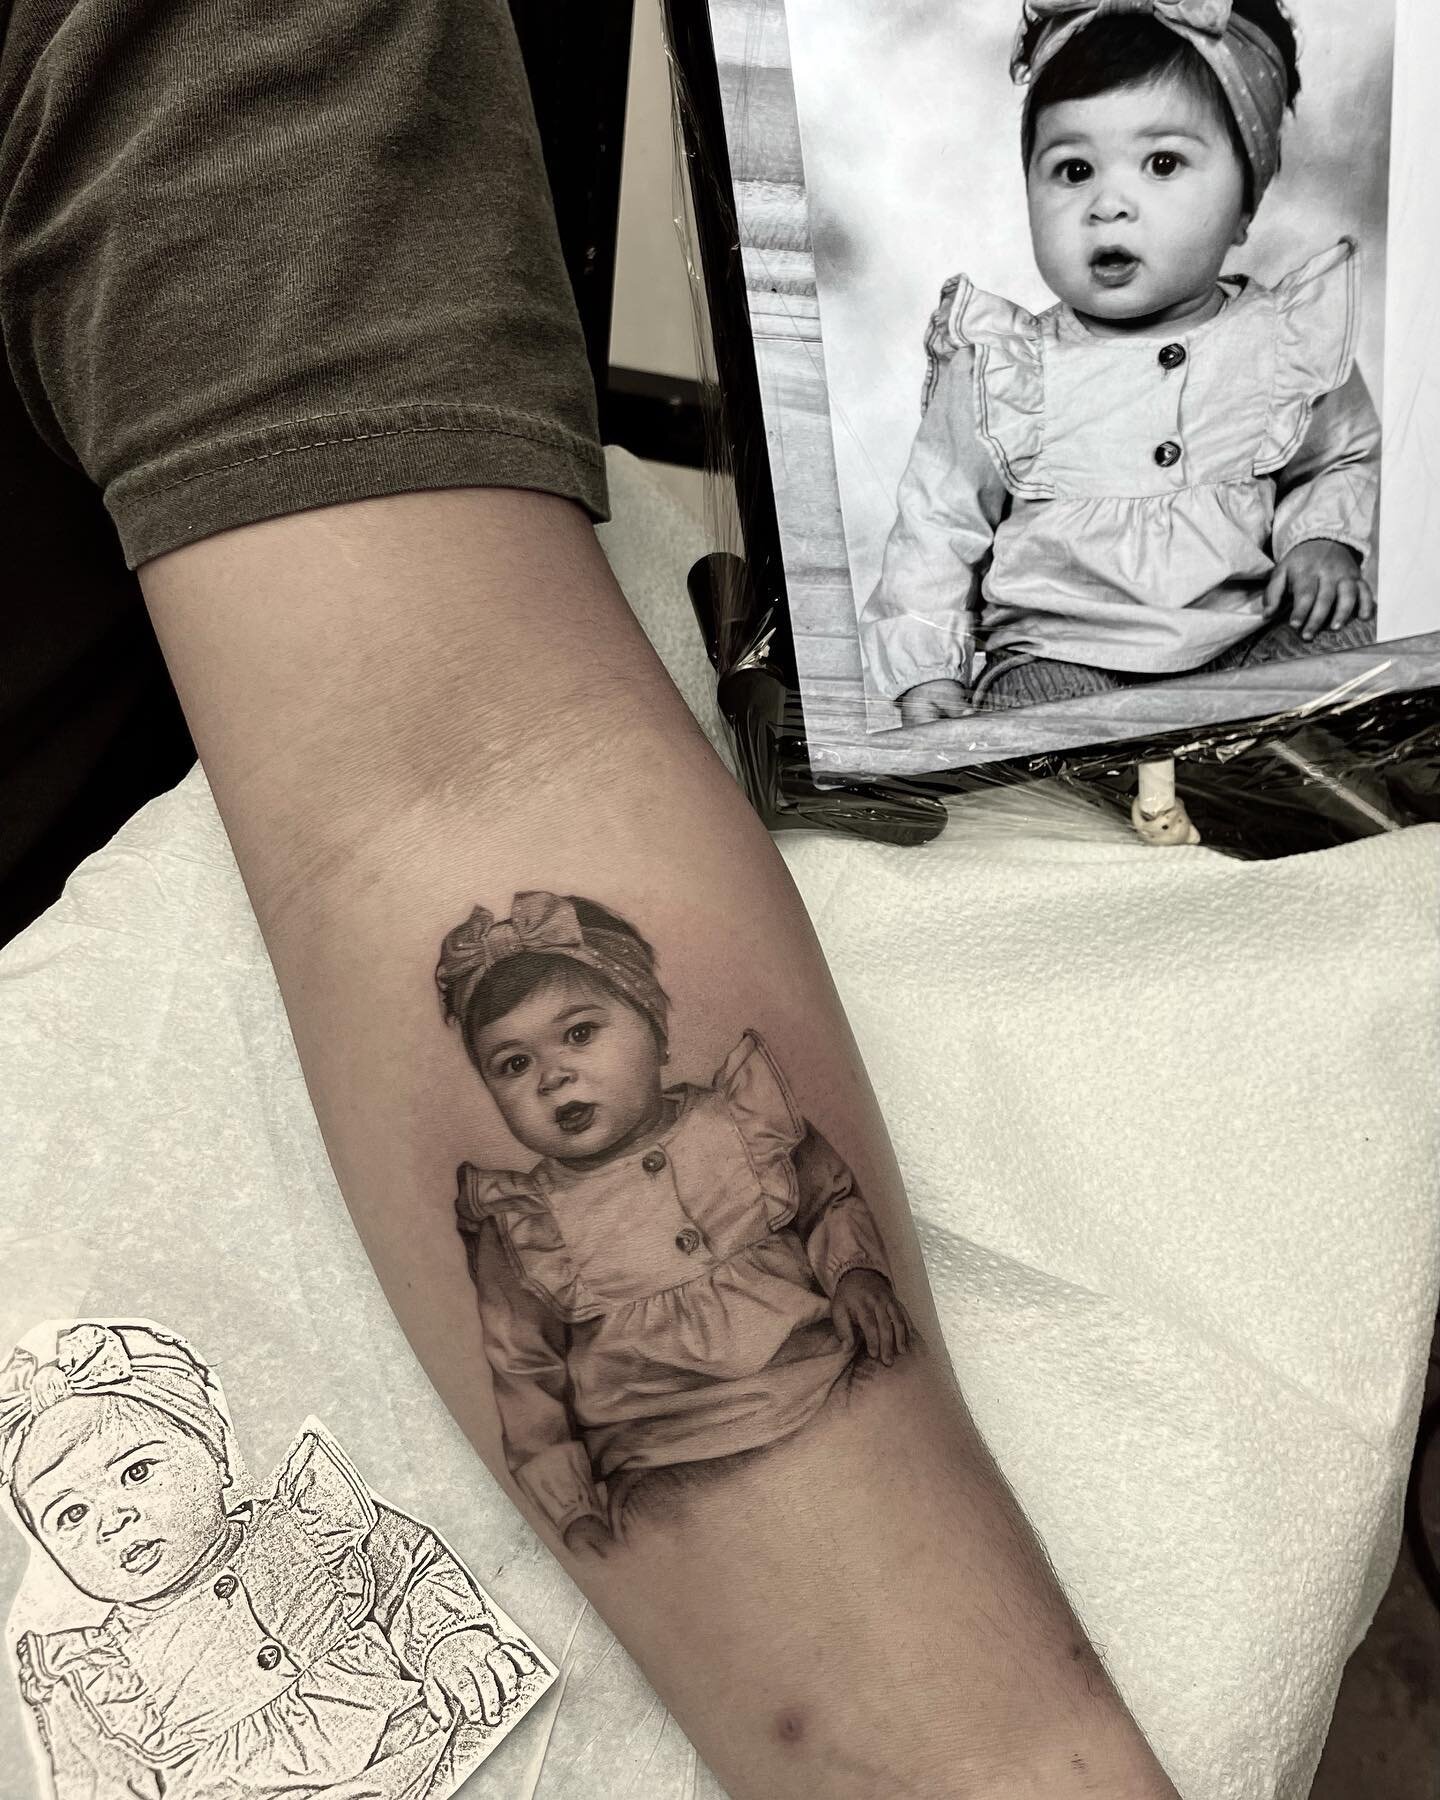 Copy+Paste 
His daughter 🤍
4h

#tattoo #portraittattoo #babytattoo #daughtertattoo #familylove #microrealism #photorealism #goldy #smalltattoo #copypaste